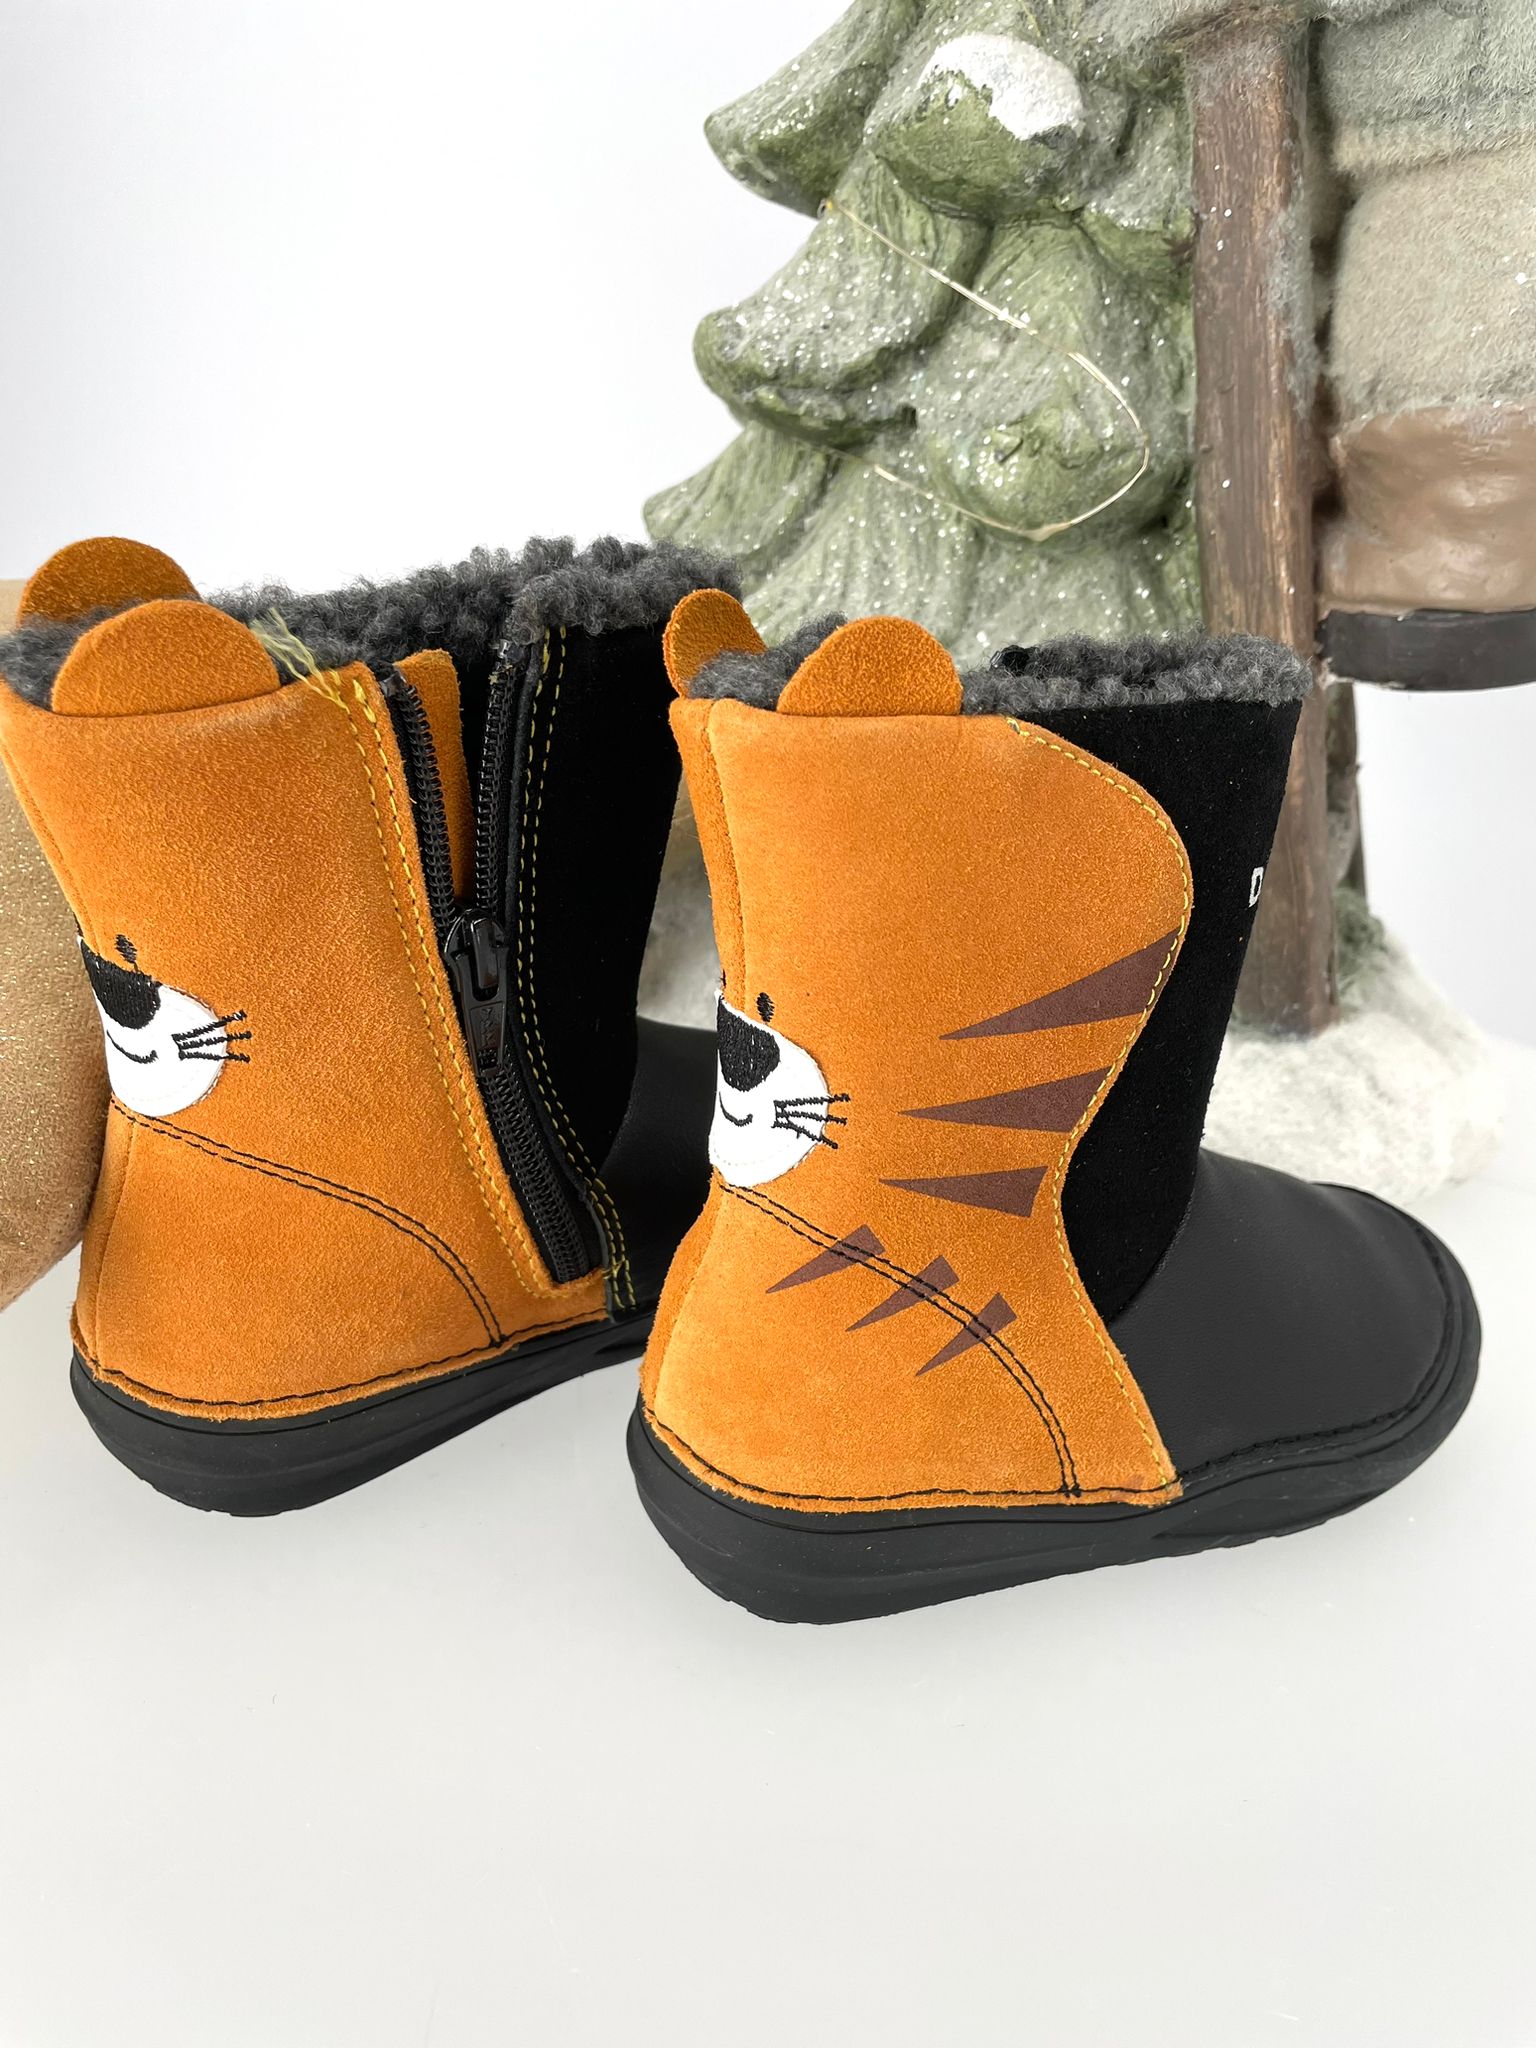 Zimné topánky s kožuškom TAIGER orange D.D.Step